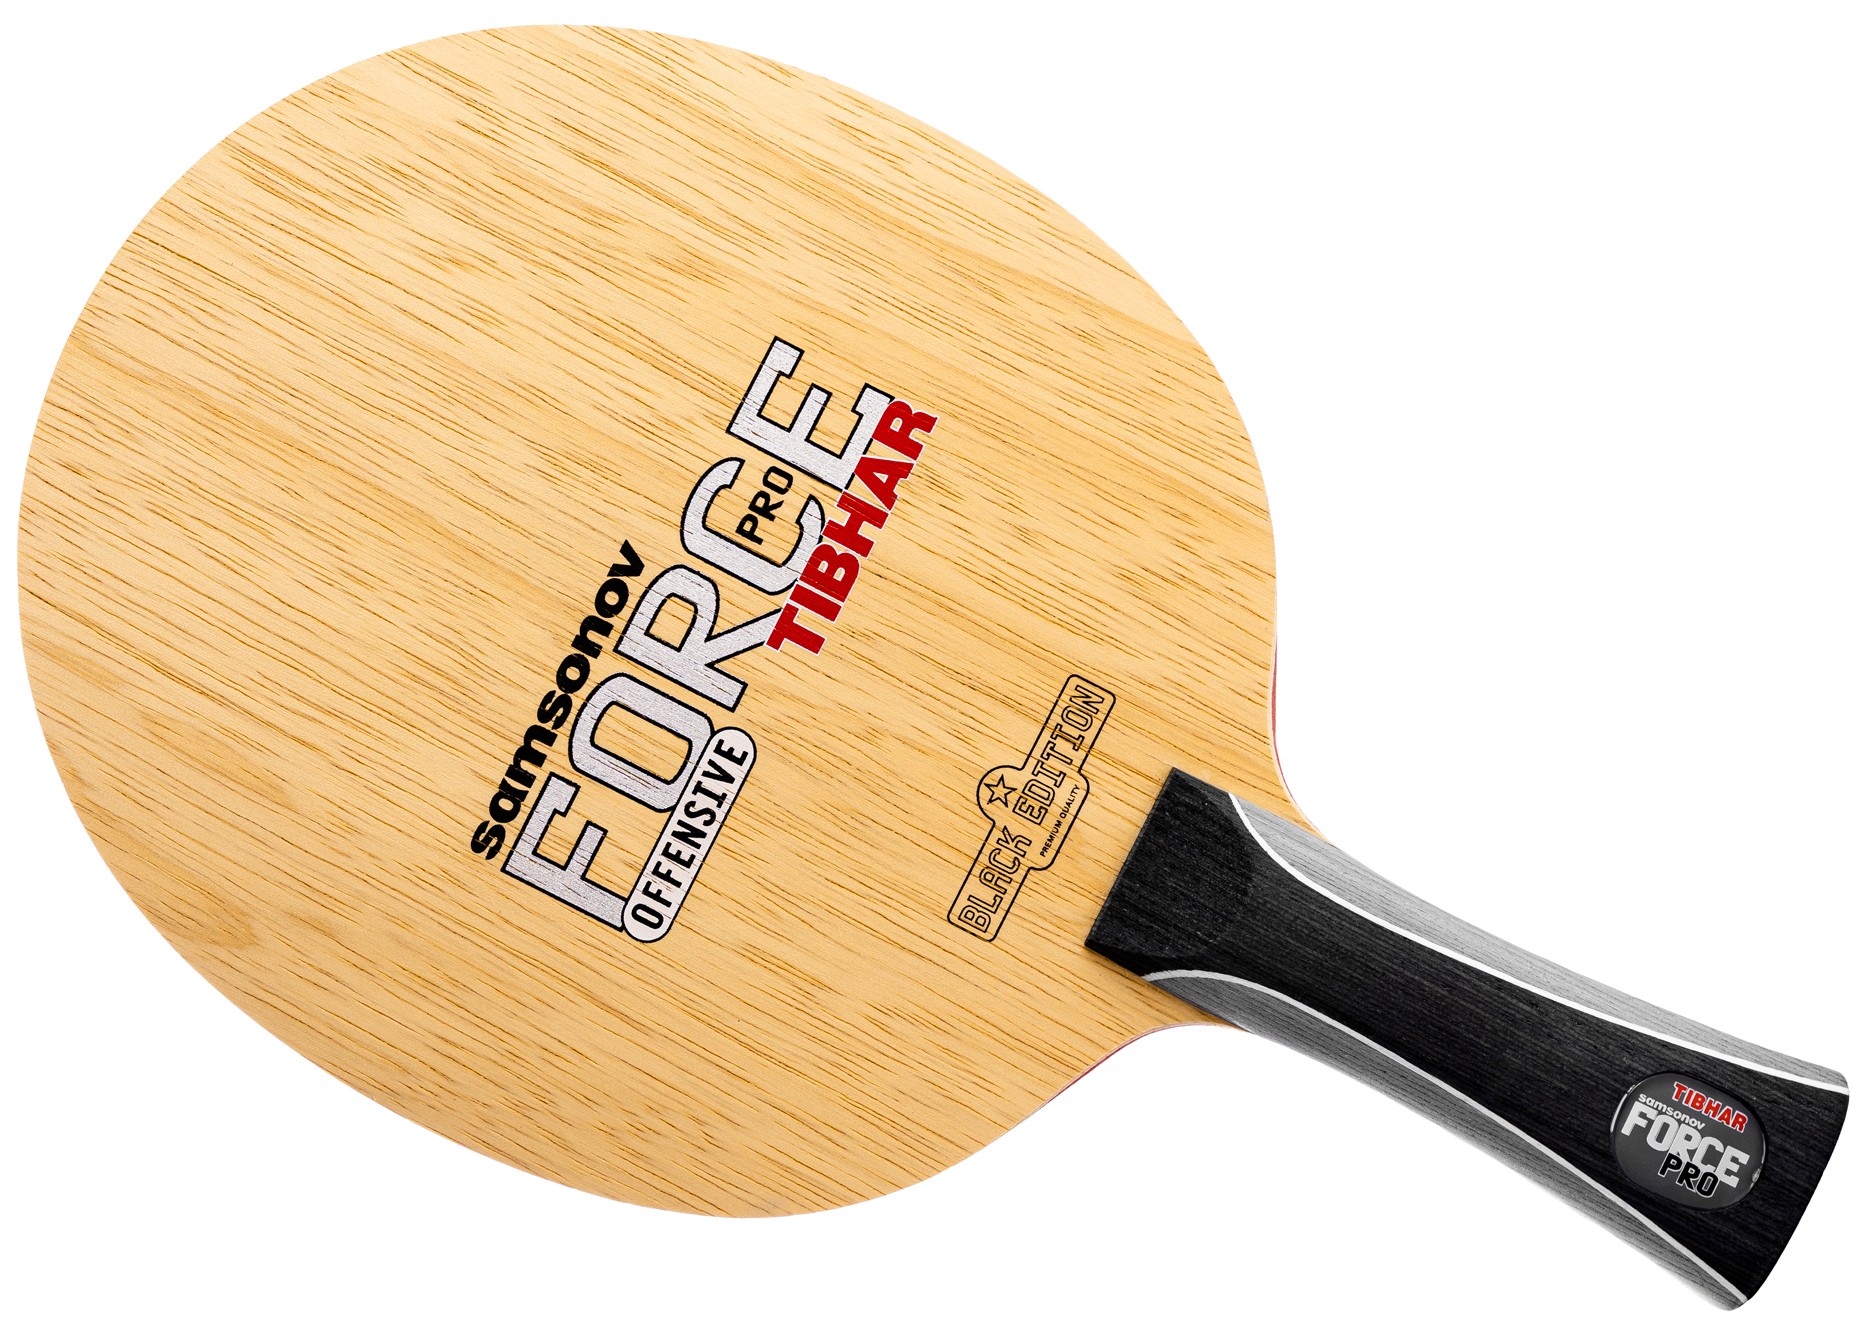 SALE w/ Evolution MX-P FL Pro Racket Samsonov Black Force Free shipping 